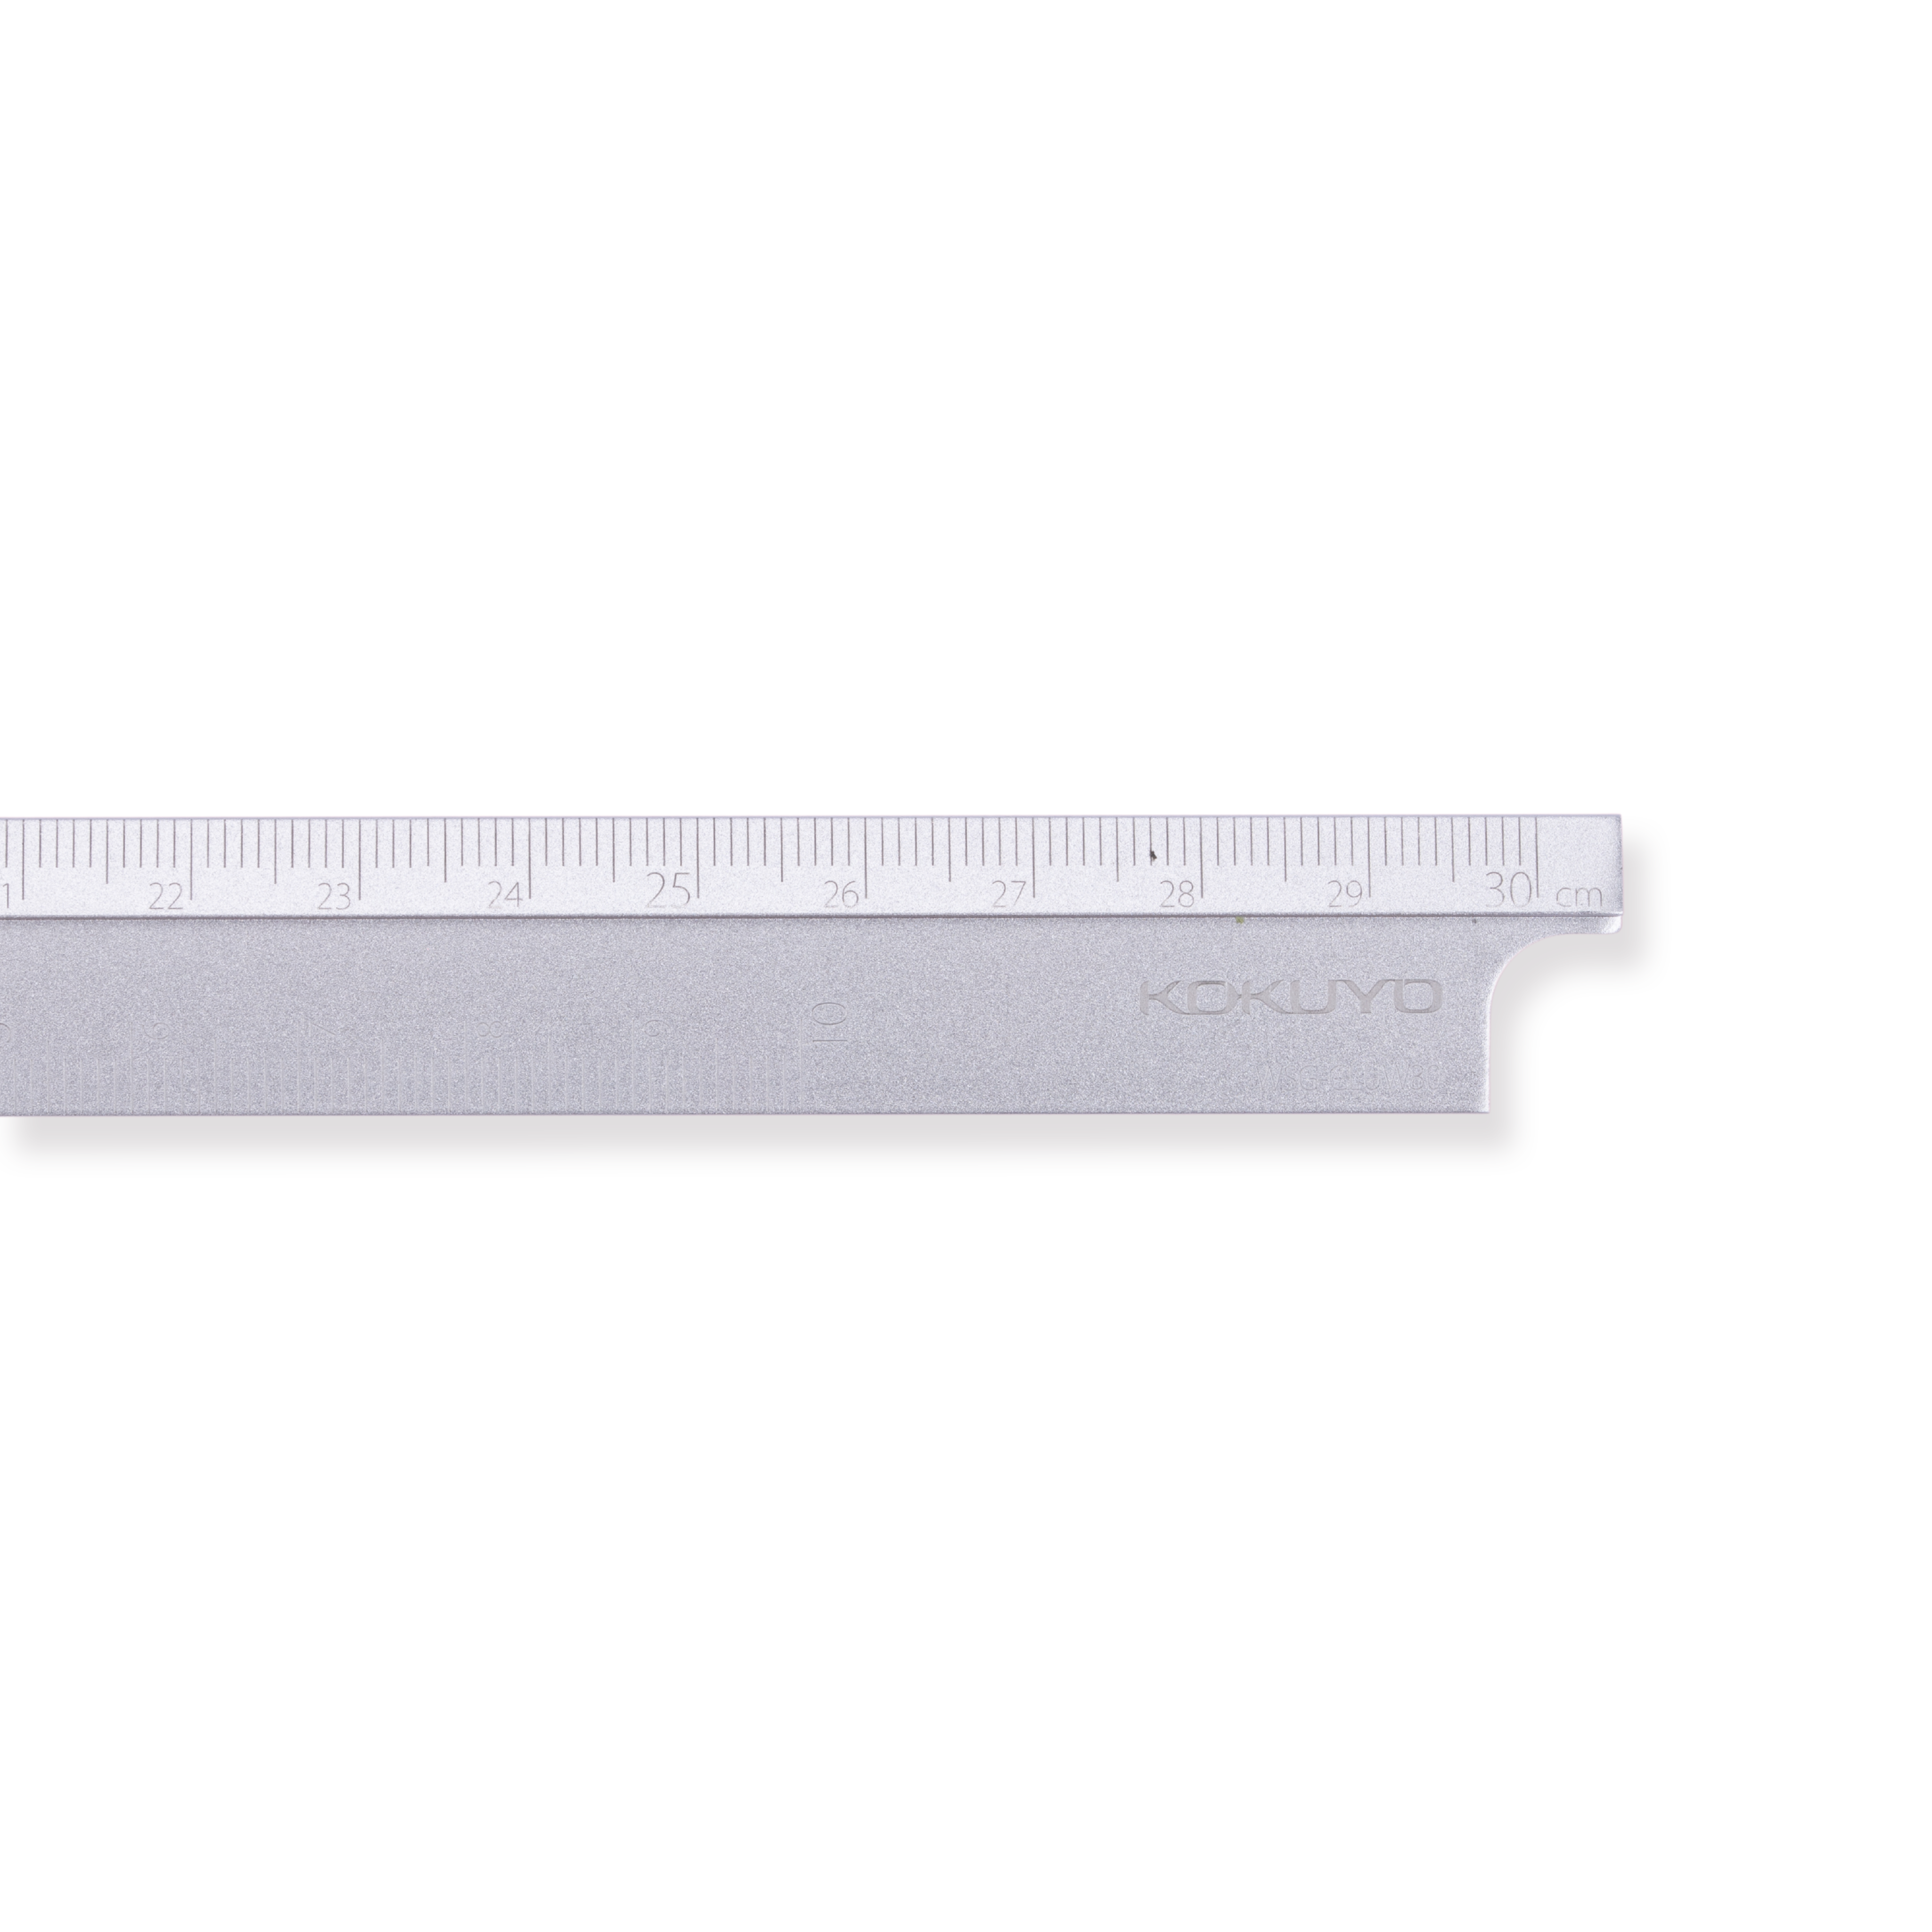 Kokuyo Aluminum Folding Ruler - 15/30 cm - Silver